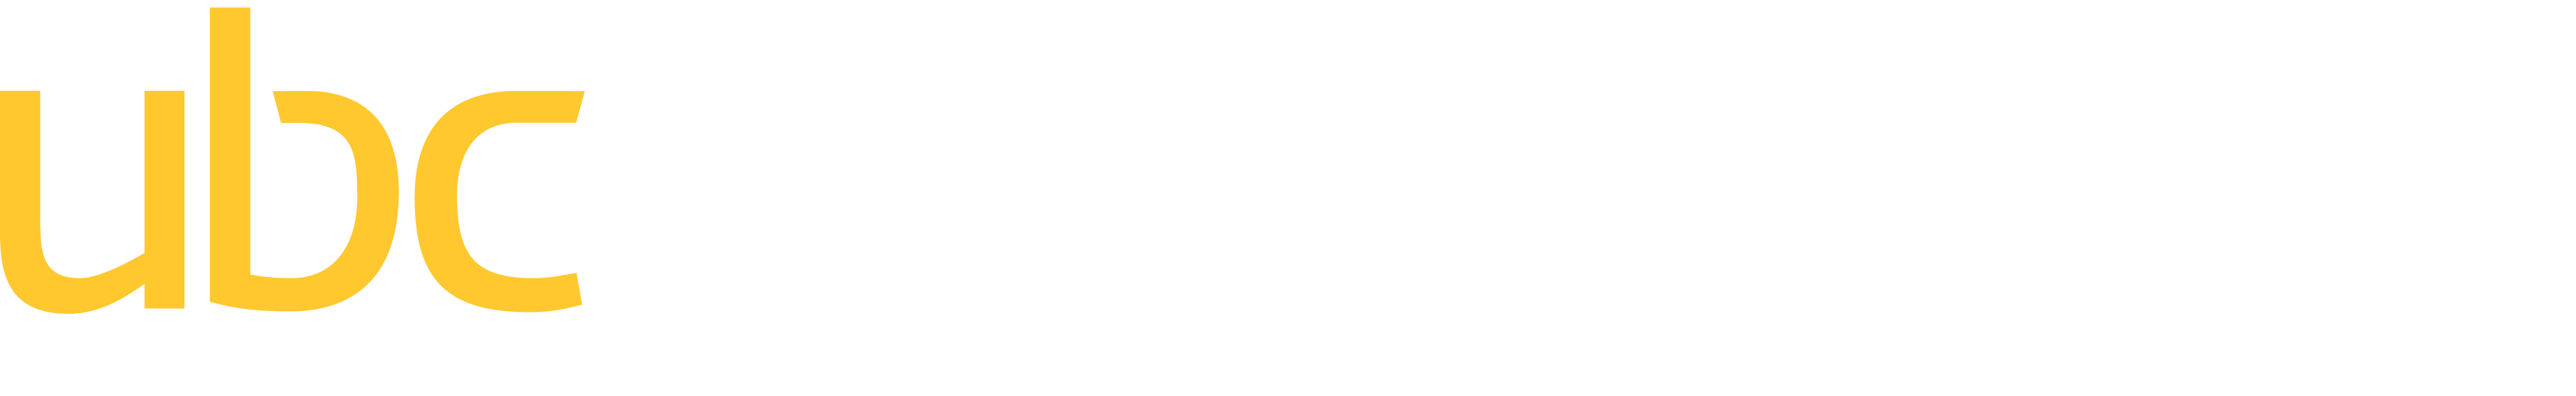 University of British Columbia Faculty Association